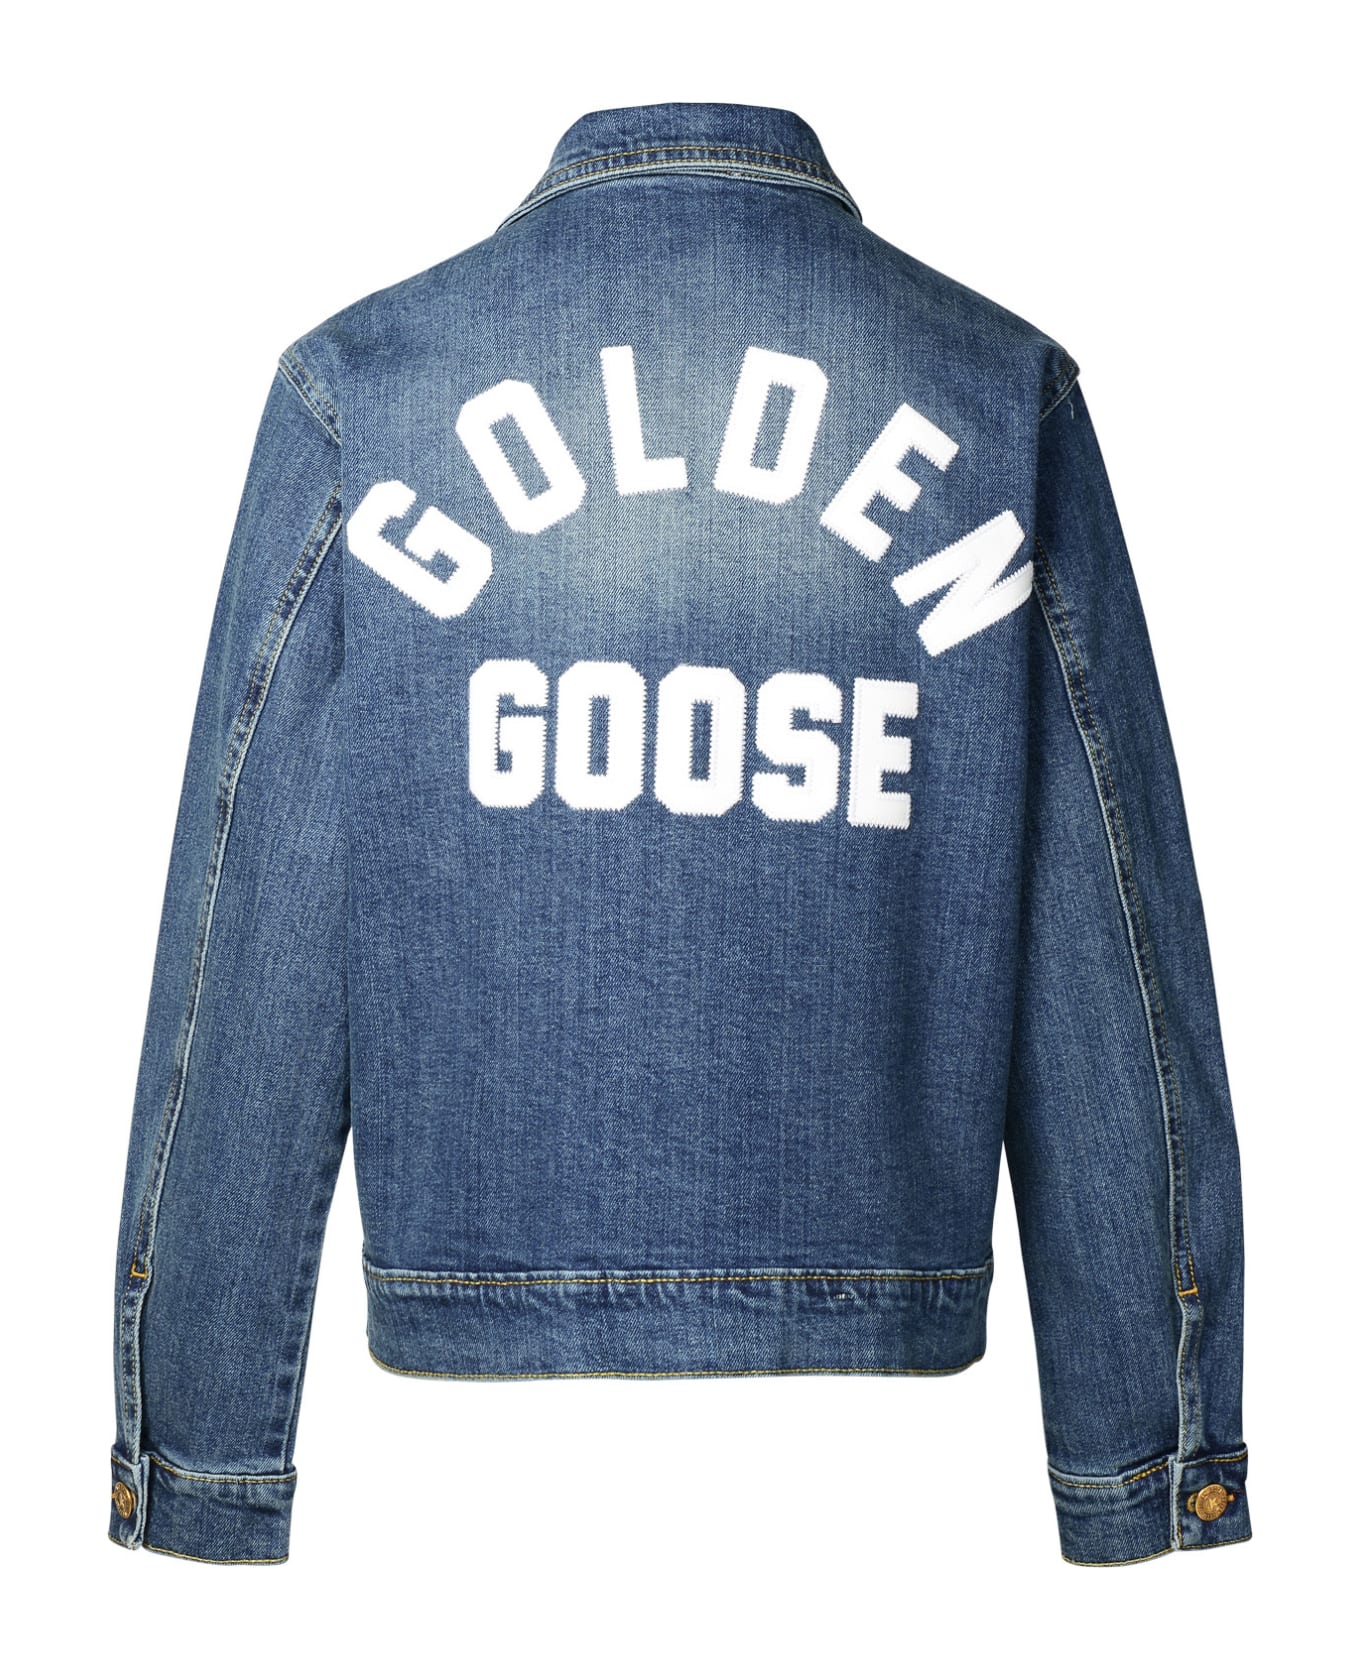 Golden Goose Blue Denim Jacket - Medium Blue